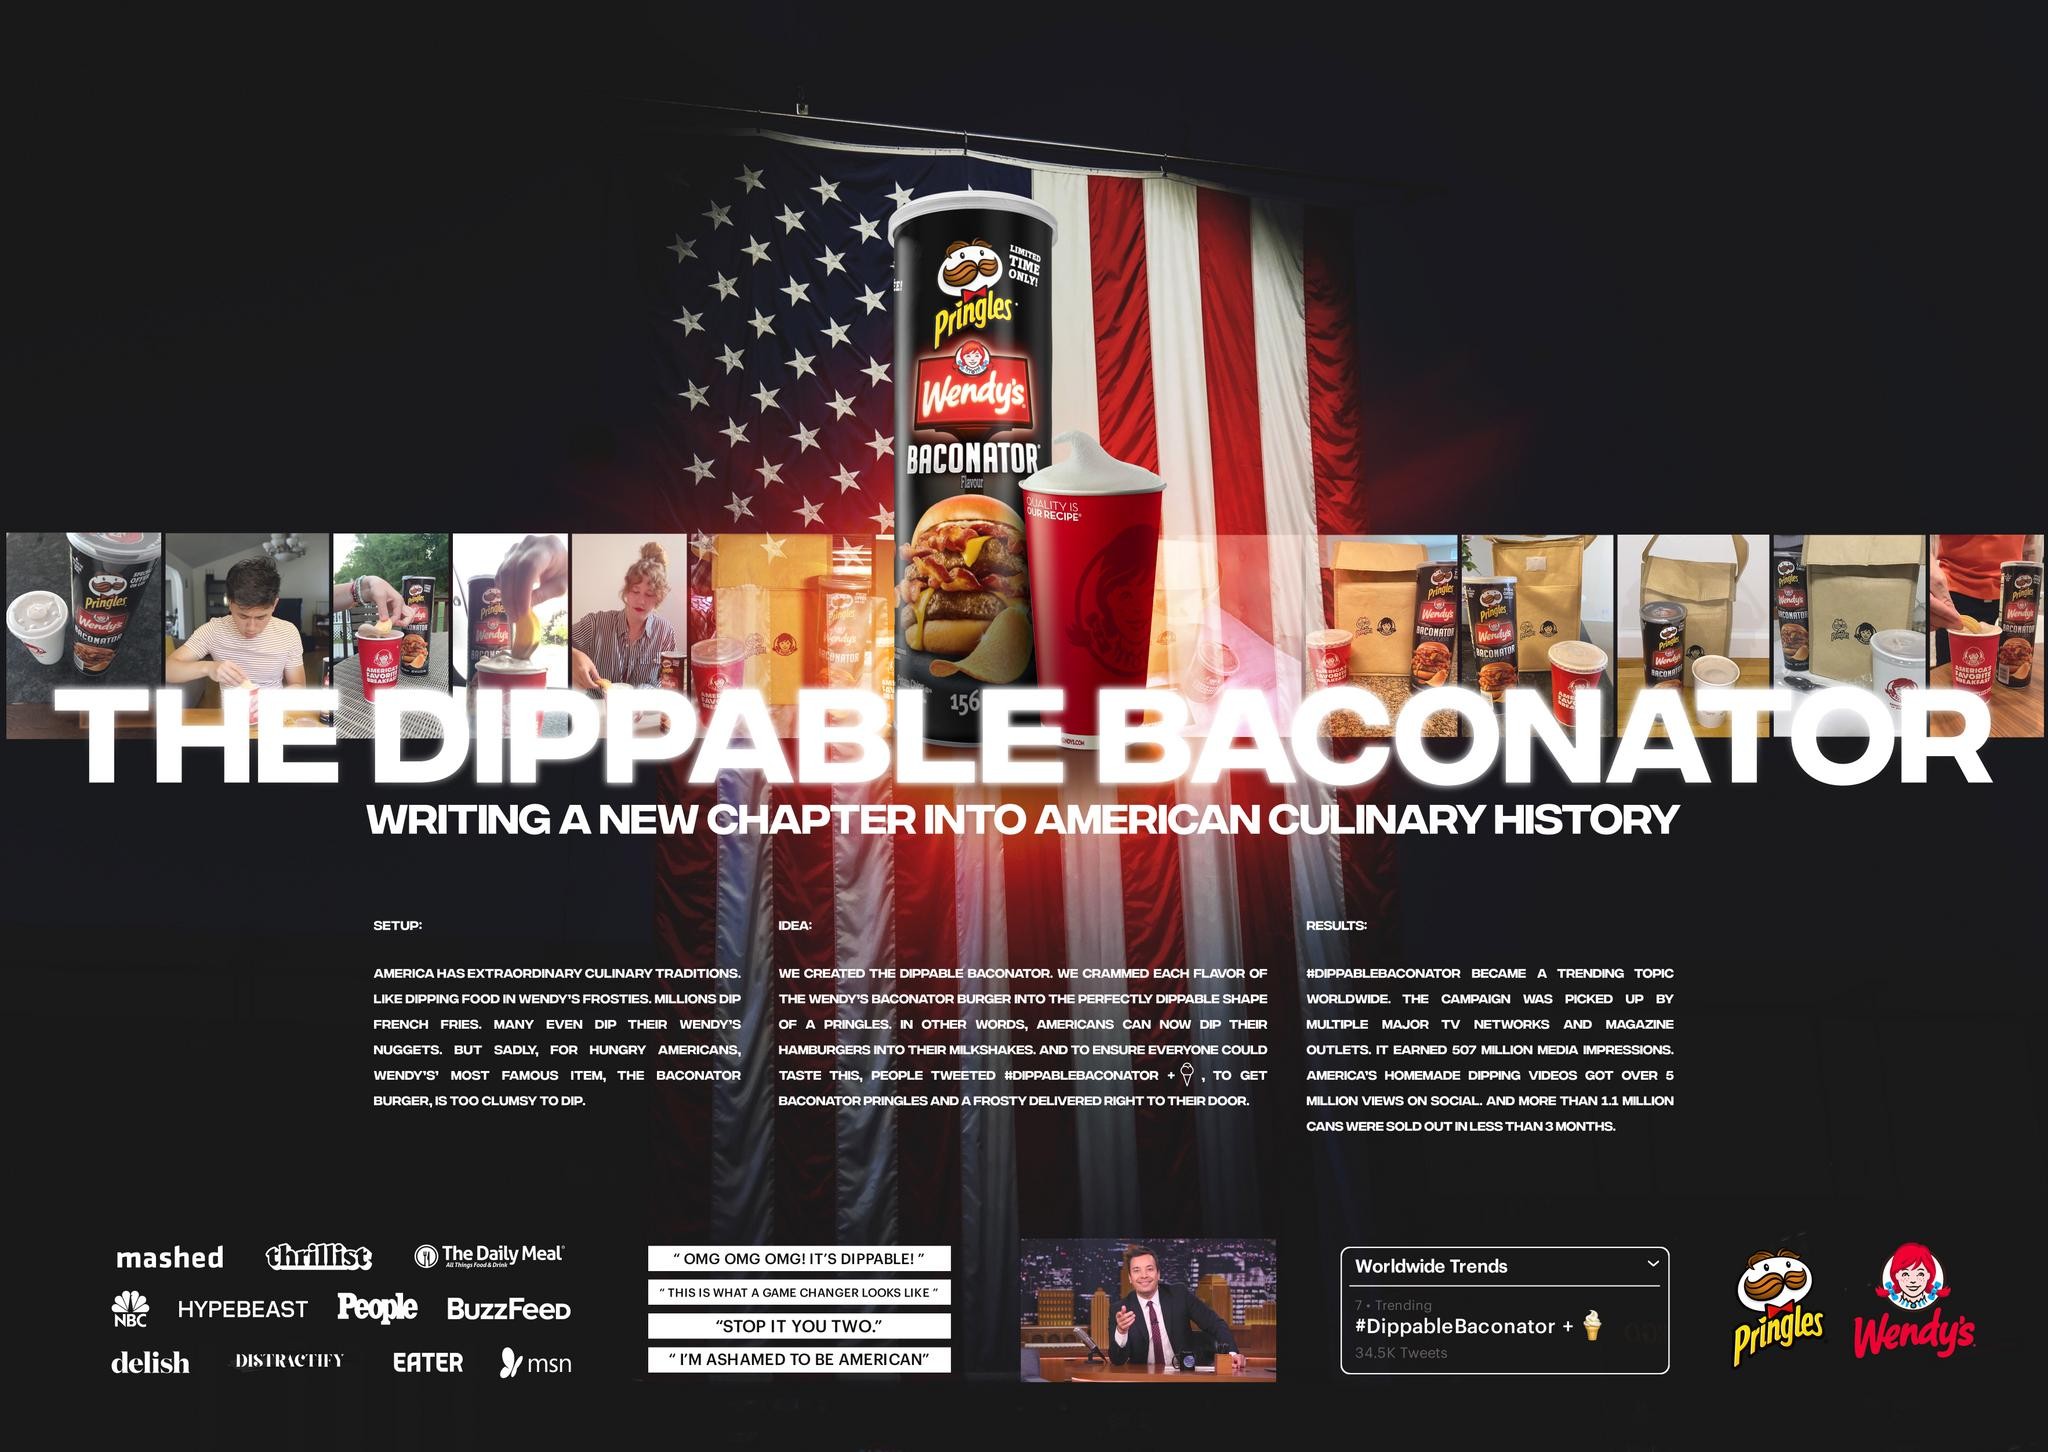 The Dippable Baconator